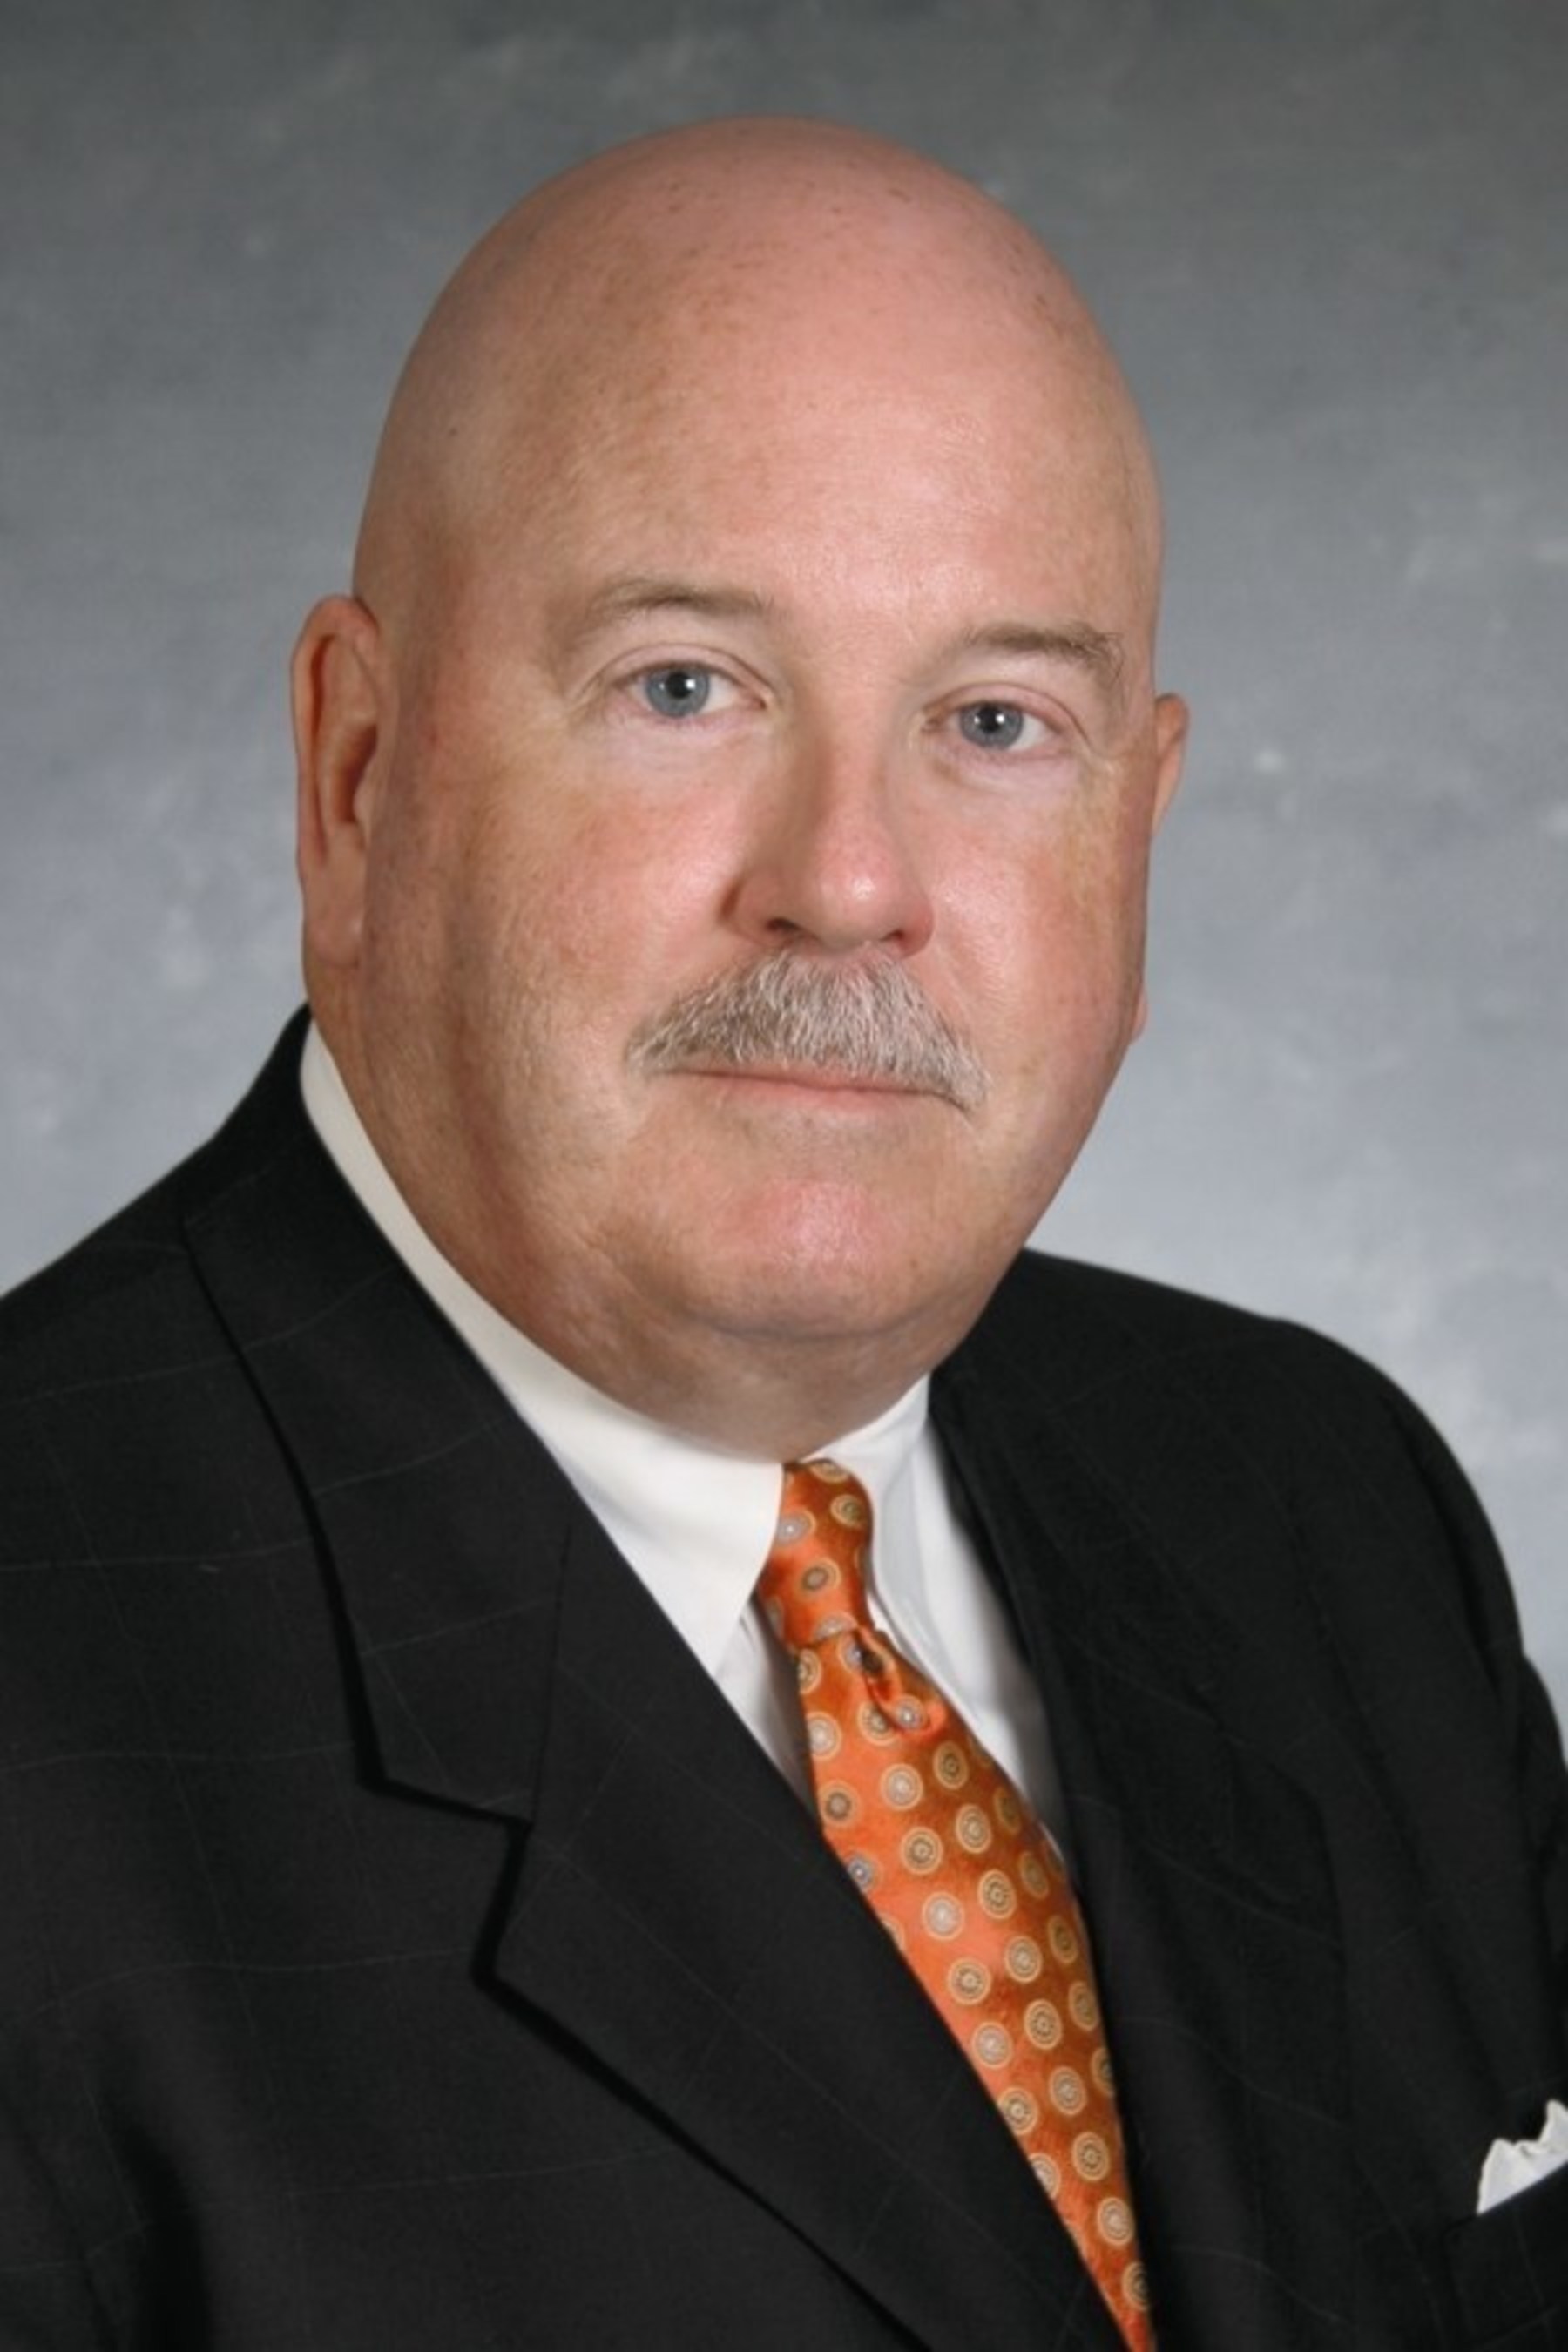 Erie Insurance CEO Terry Cavanaugh